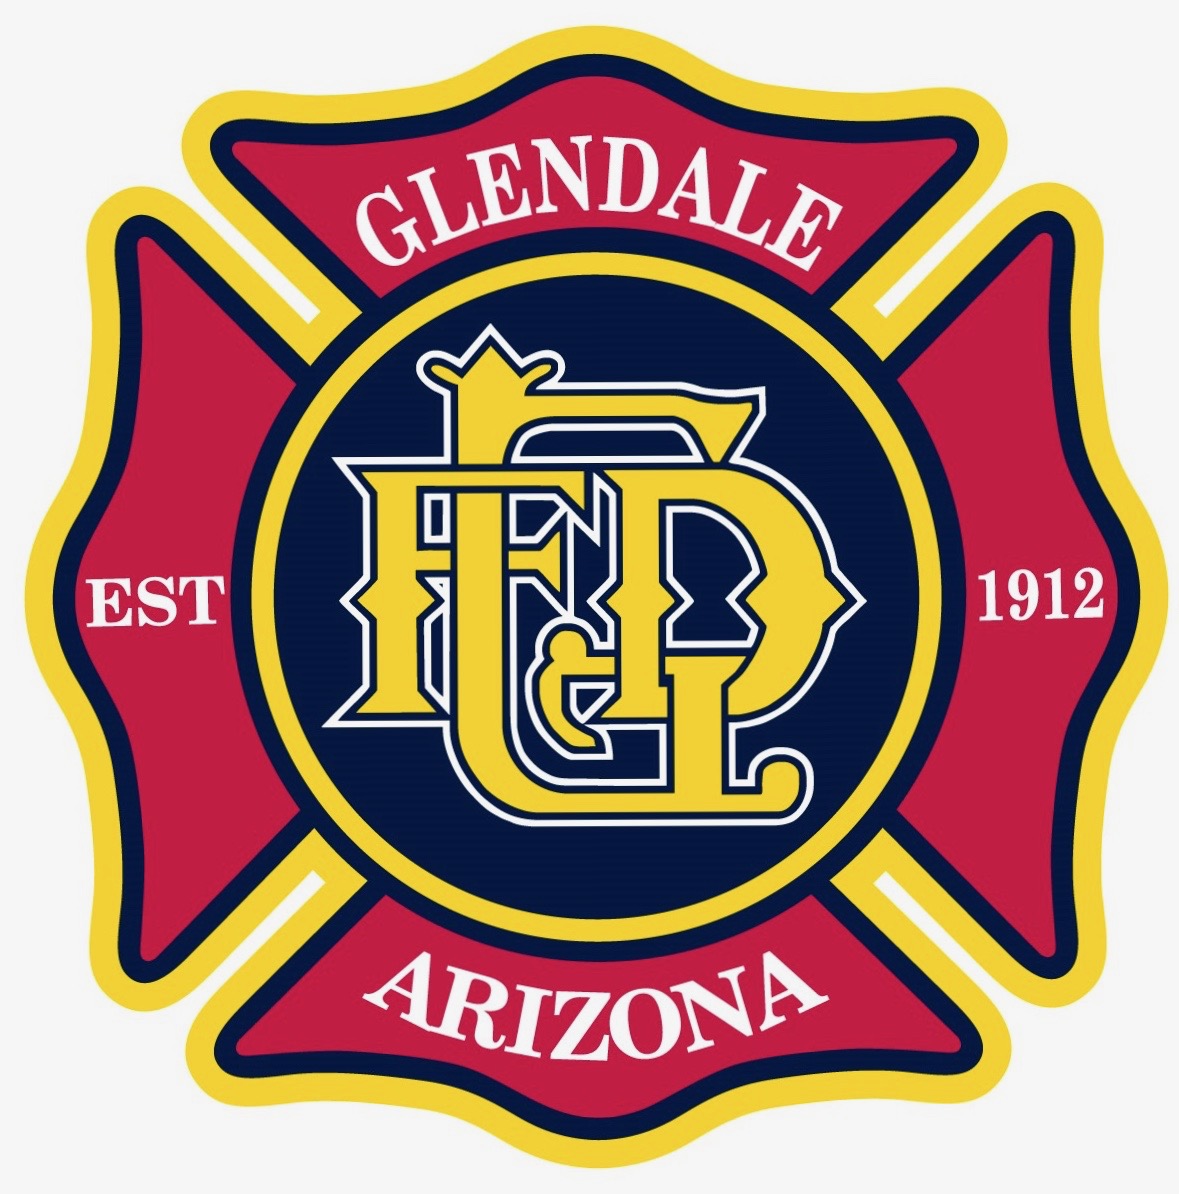 List of historic properties in Glendale, Arizona - Wikipedia